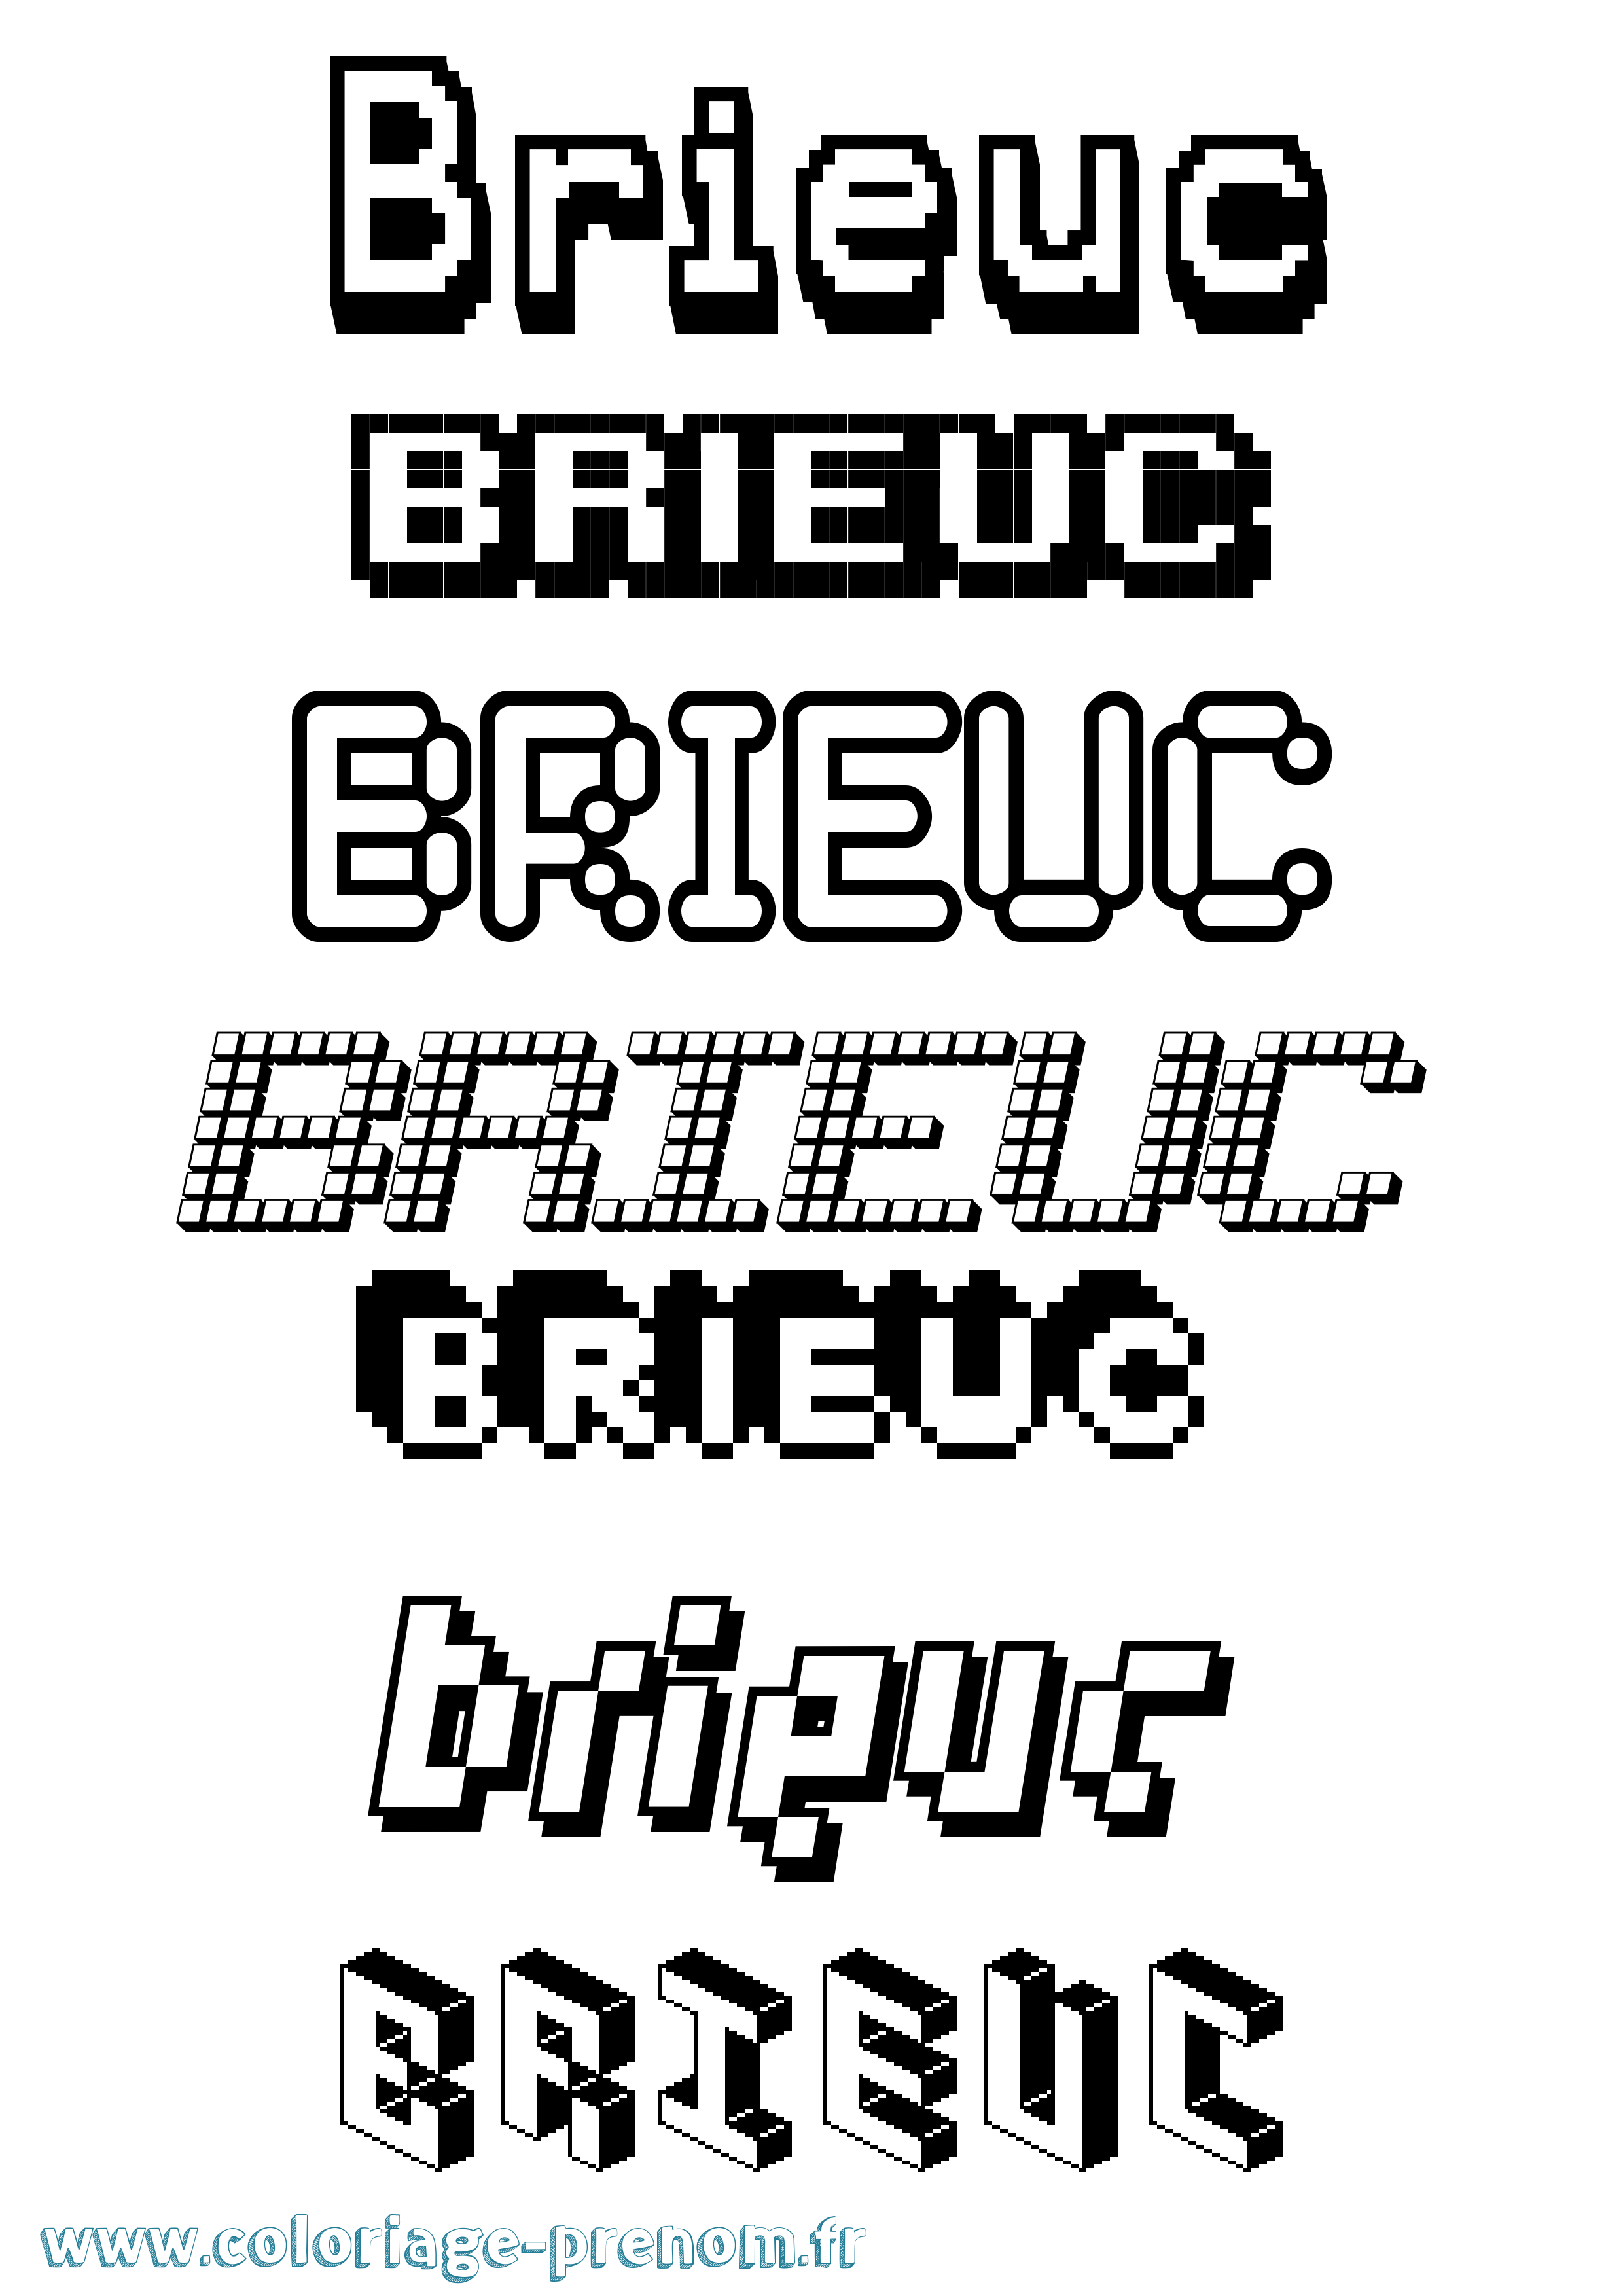 Coloriage prénom Brieuc Pixel